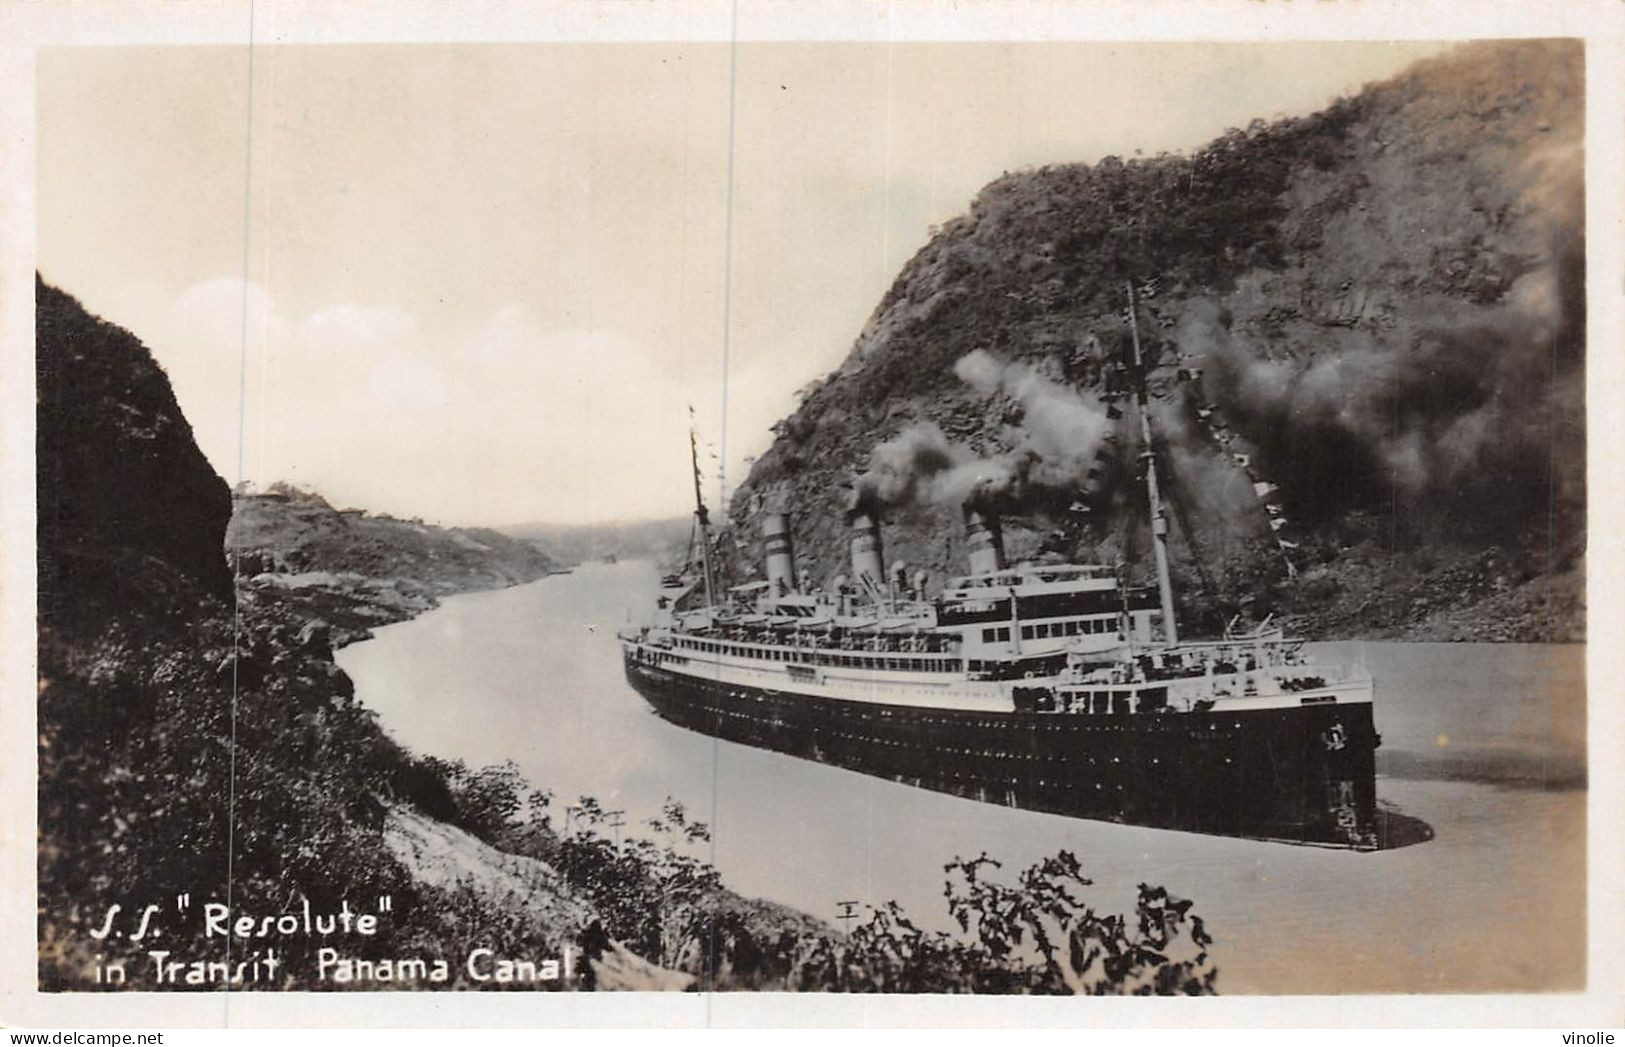 P-24-Mi-Is-1899 : CANAL DE PANAMA. BOAT. BATEAU. S.S. RESOLUTE - Panama